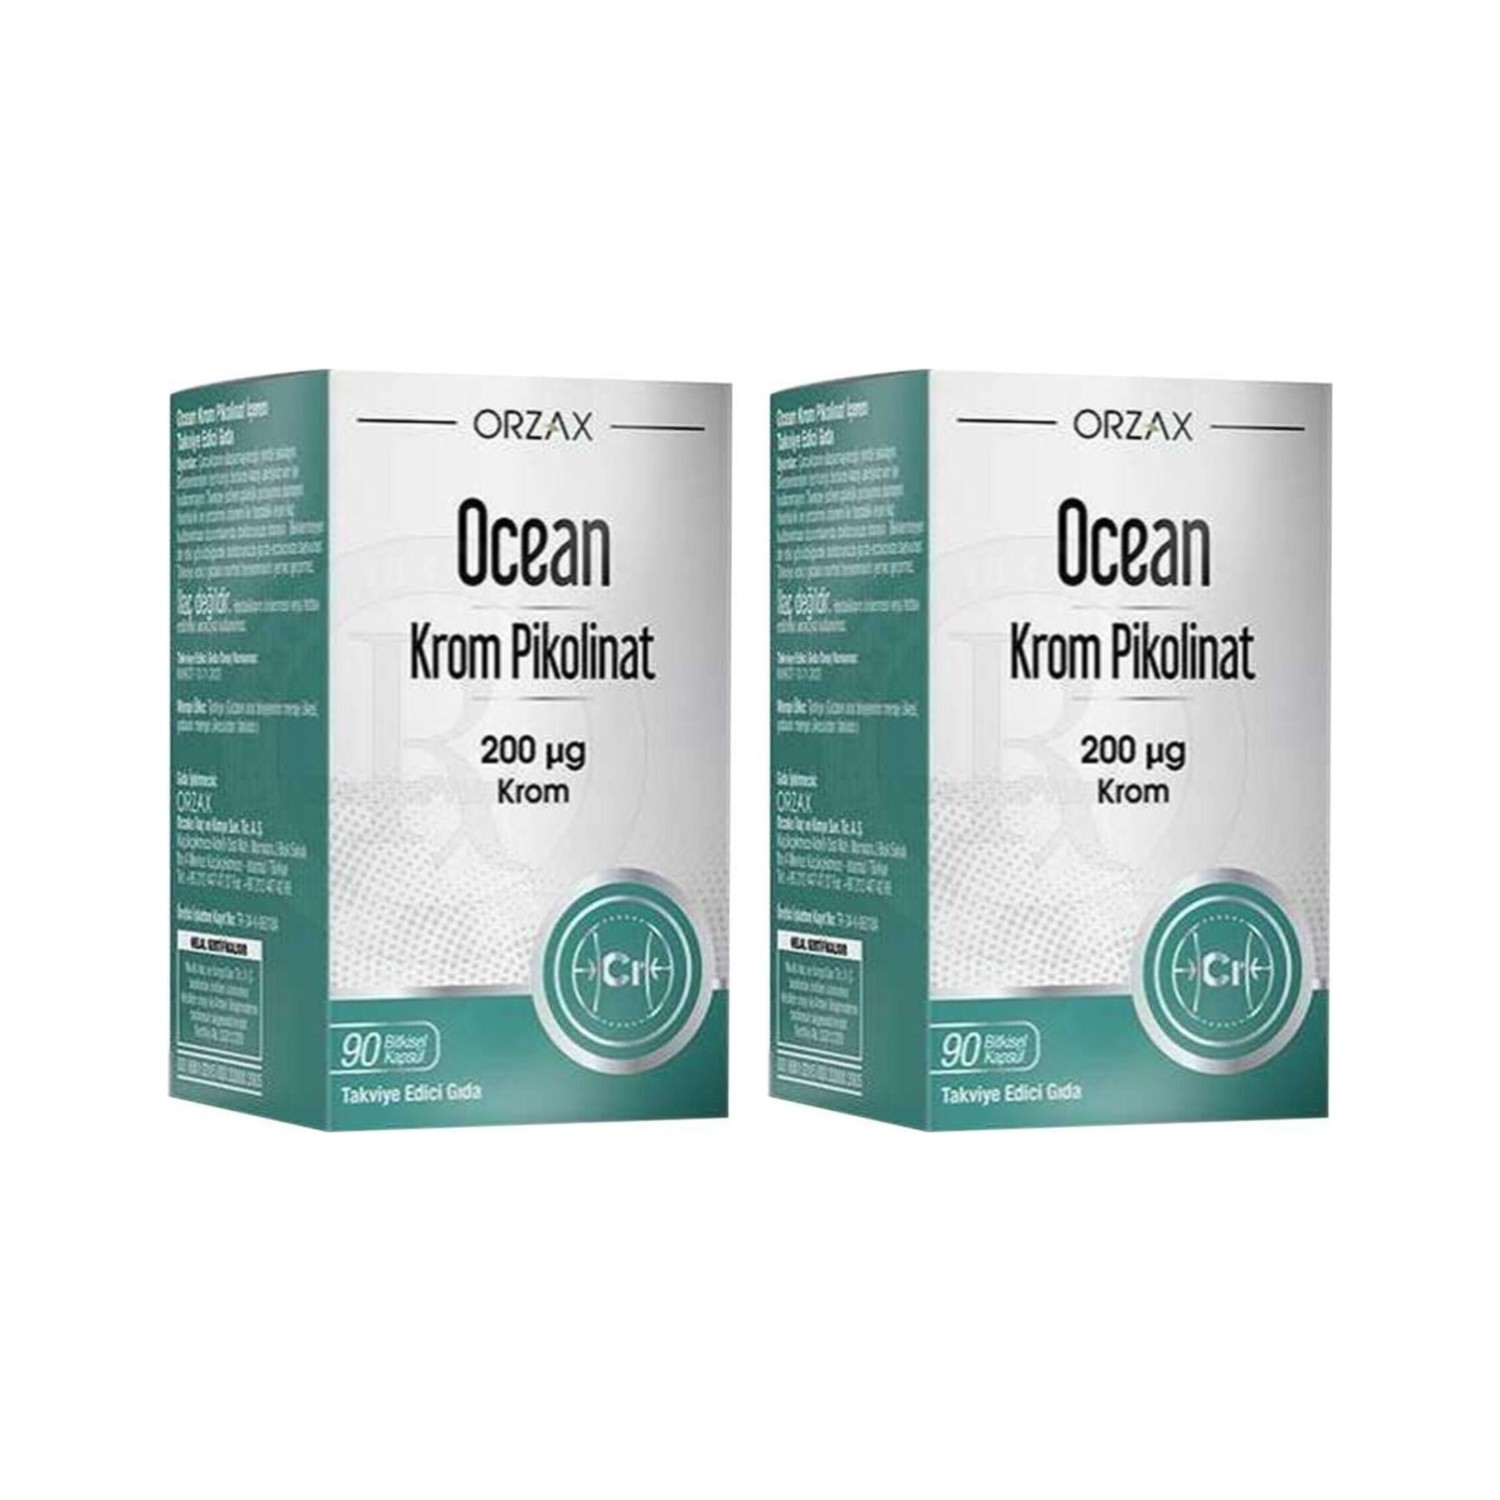 Пиколинат хрома Ocean 200 мкг, 2 упаковки по 90 капсул atech nutrition premium chrome picolinate